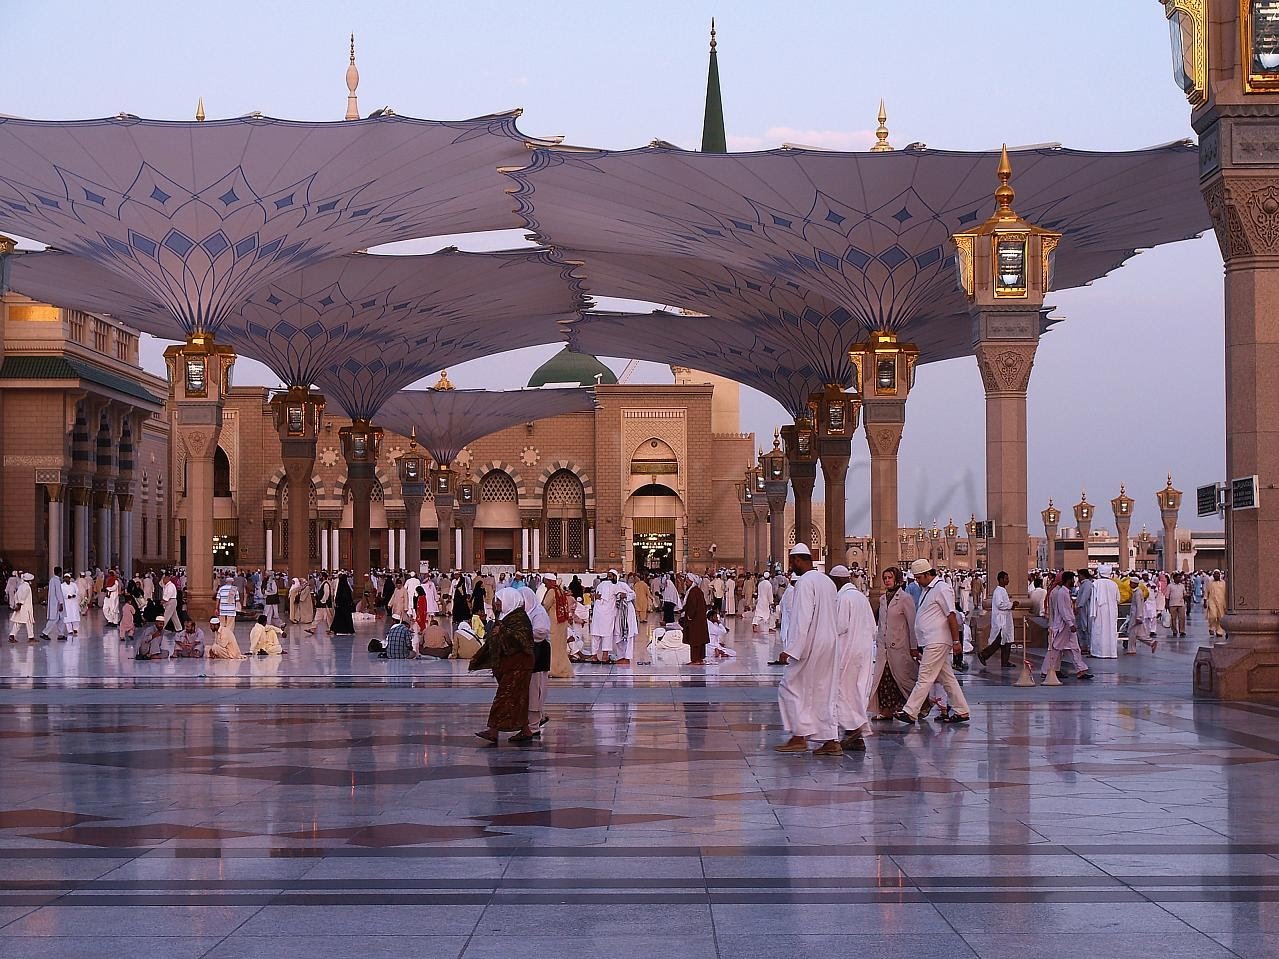 http://4.bp.blogspot.com/_Qc6aMdLT994/TGUEdVW34BI/AAAAAAAAF9Q/dYu9i9H13HY/s1600/Masjid+Al+Nabawi+in+Madinah+-+Saudi+Arabia+(shields).jpg